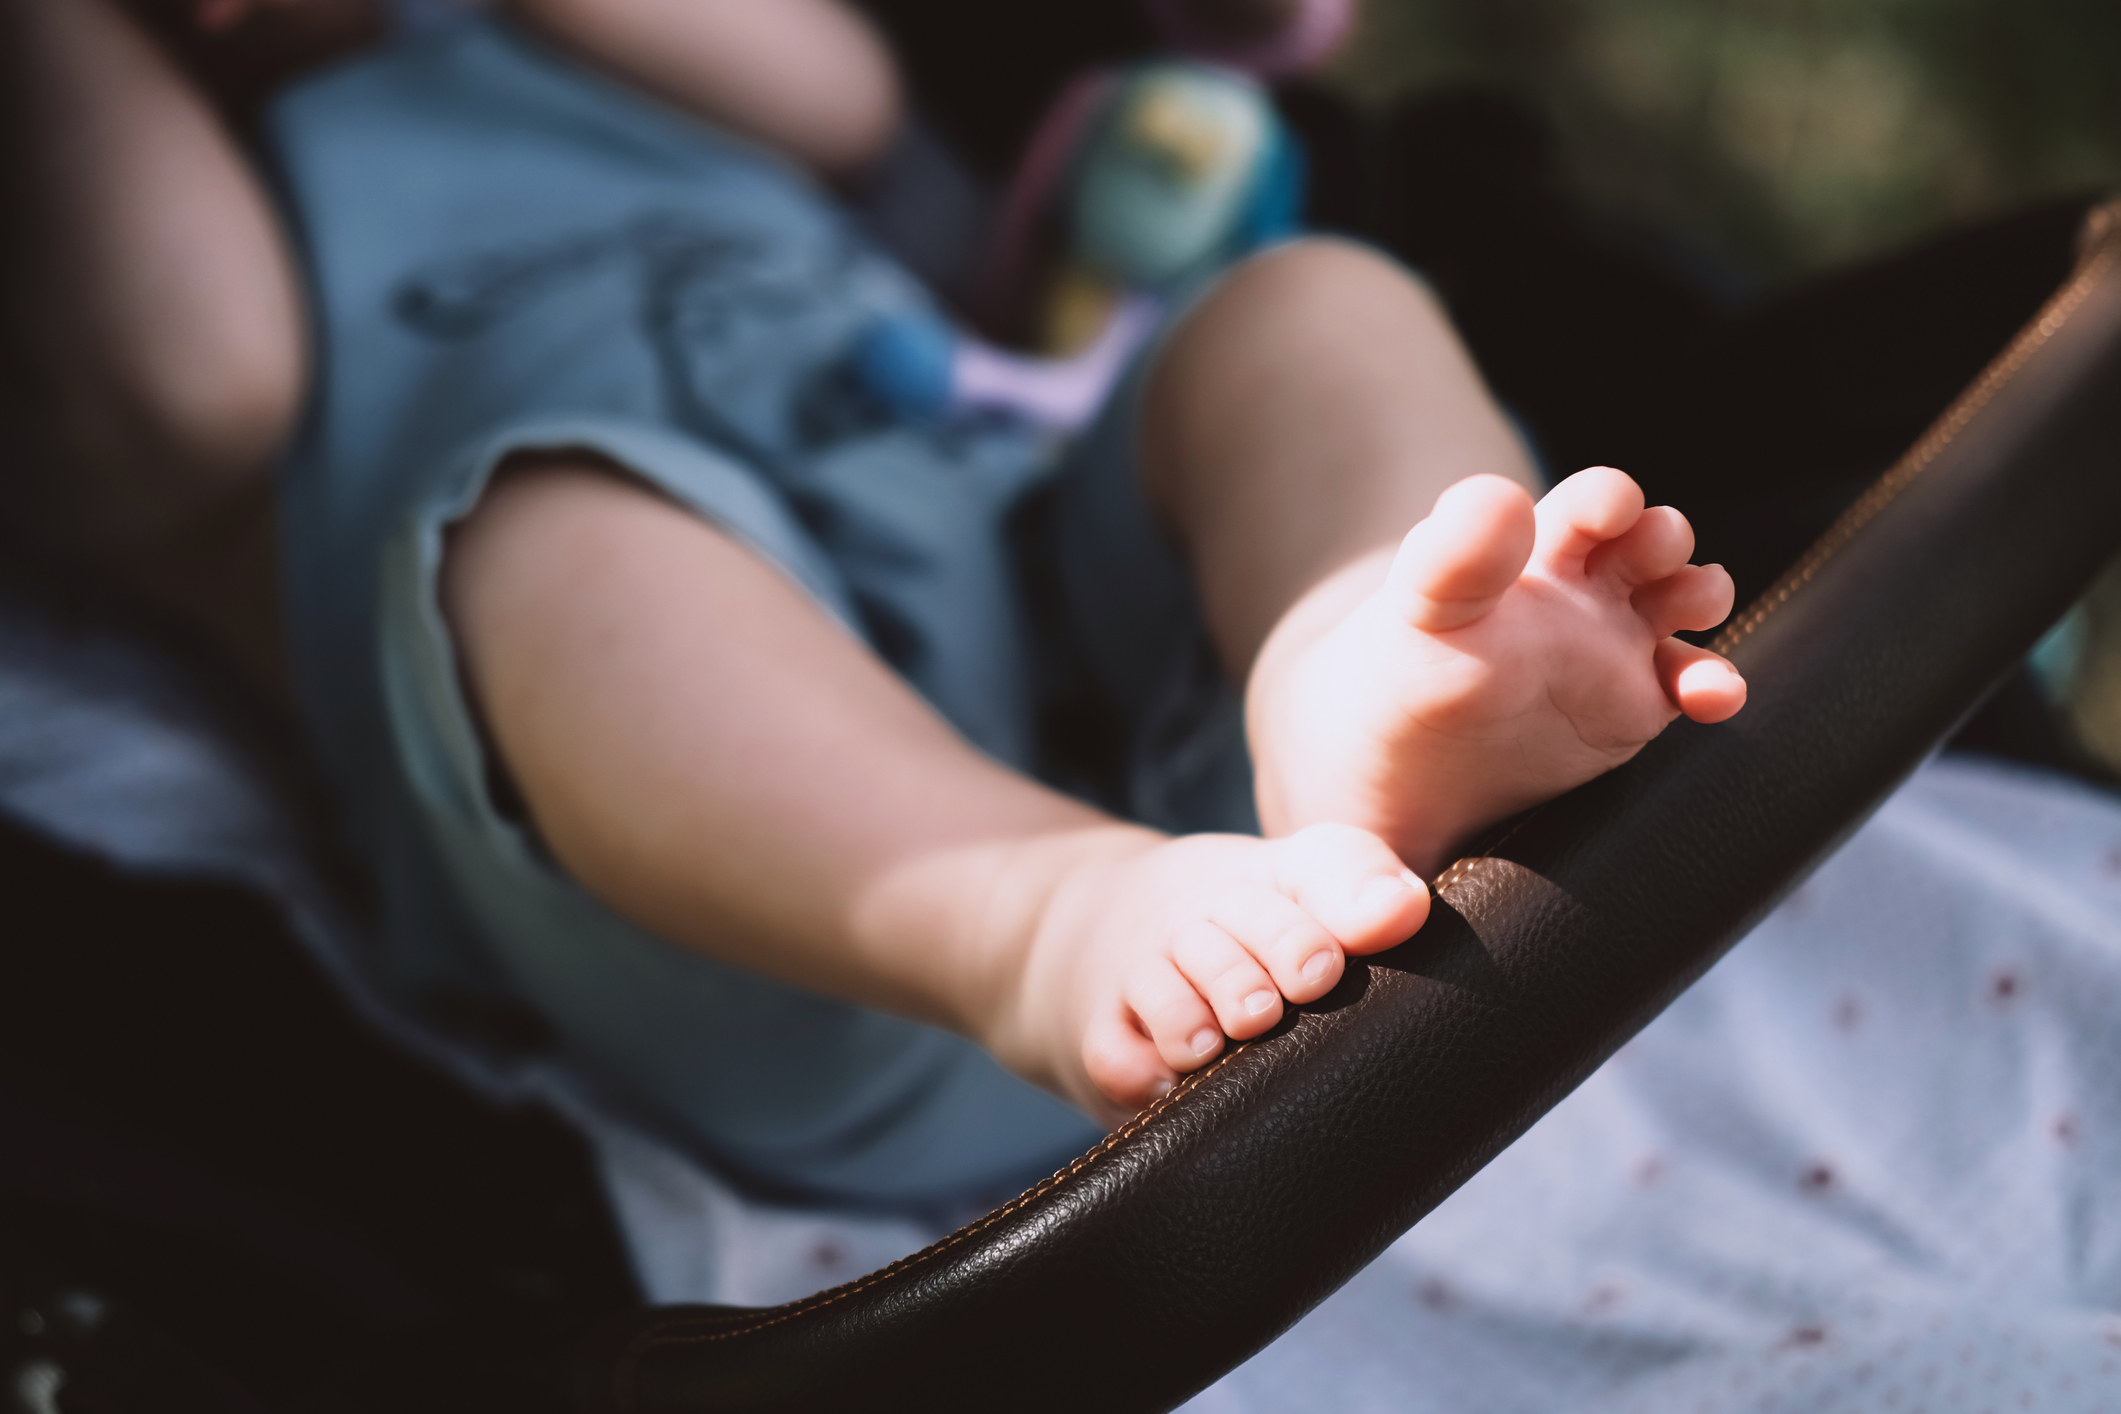 Baby feet on a stroller handle